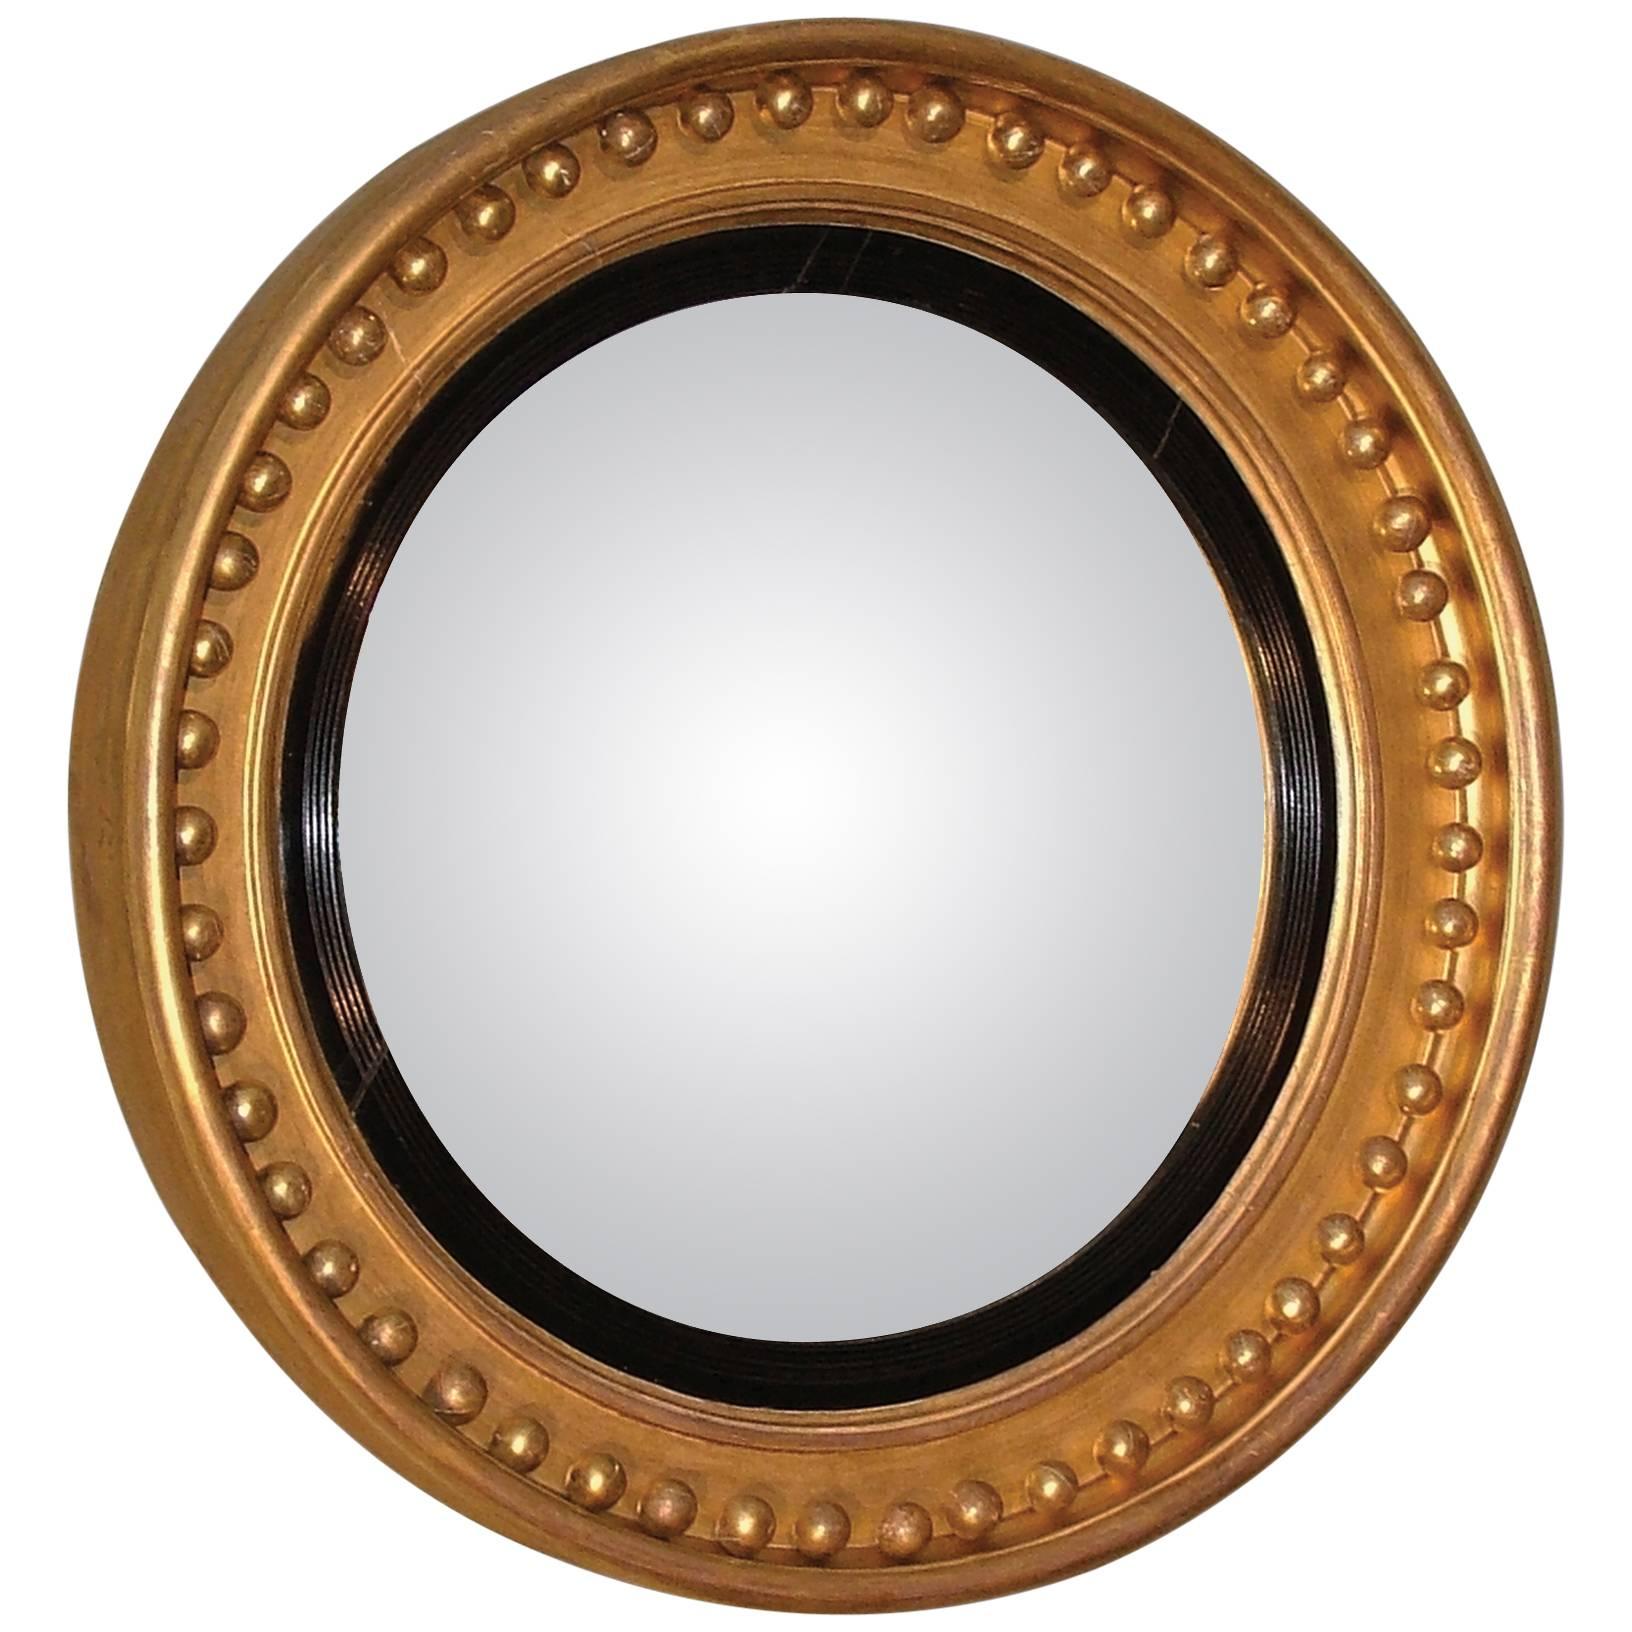 Early 19th Century Regency Period Giltwood Convex Mirror